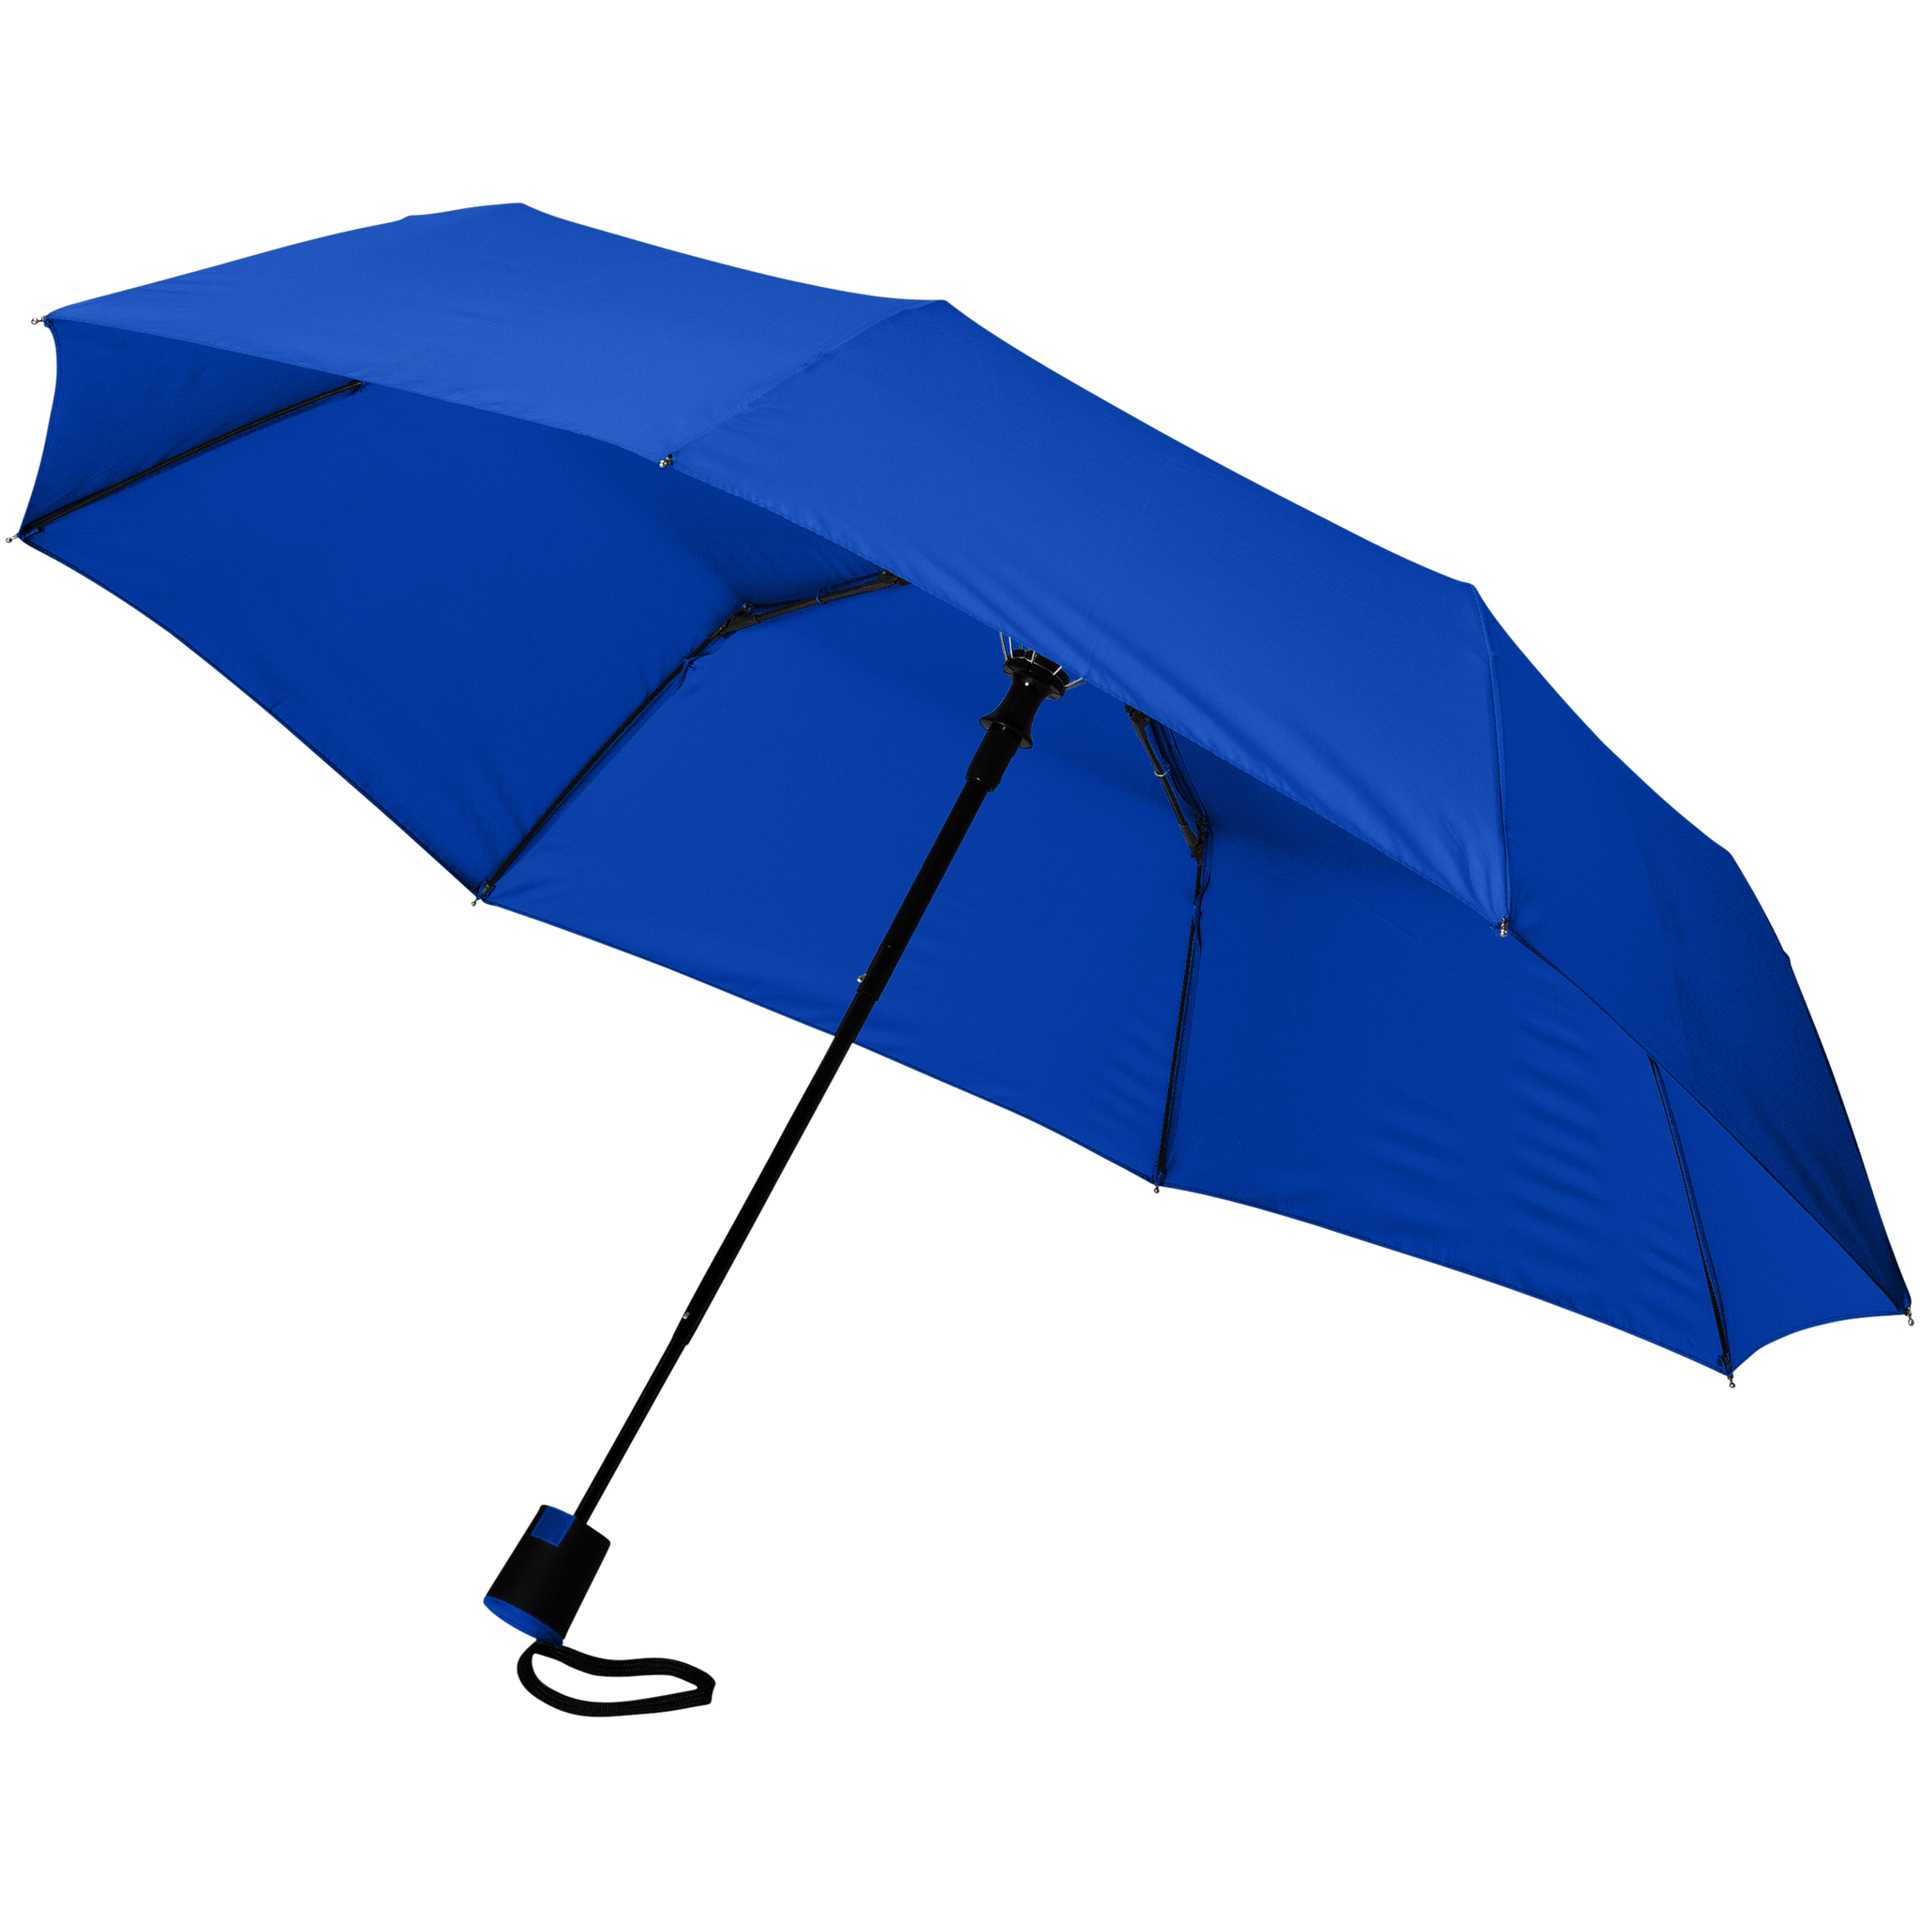 3 Section Auto Open Umbrella in blue